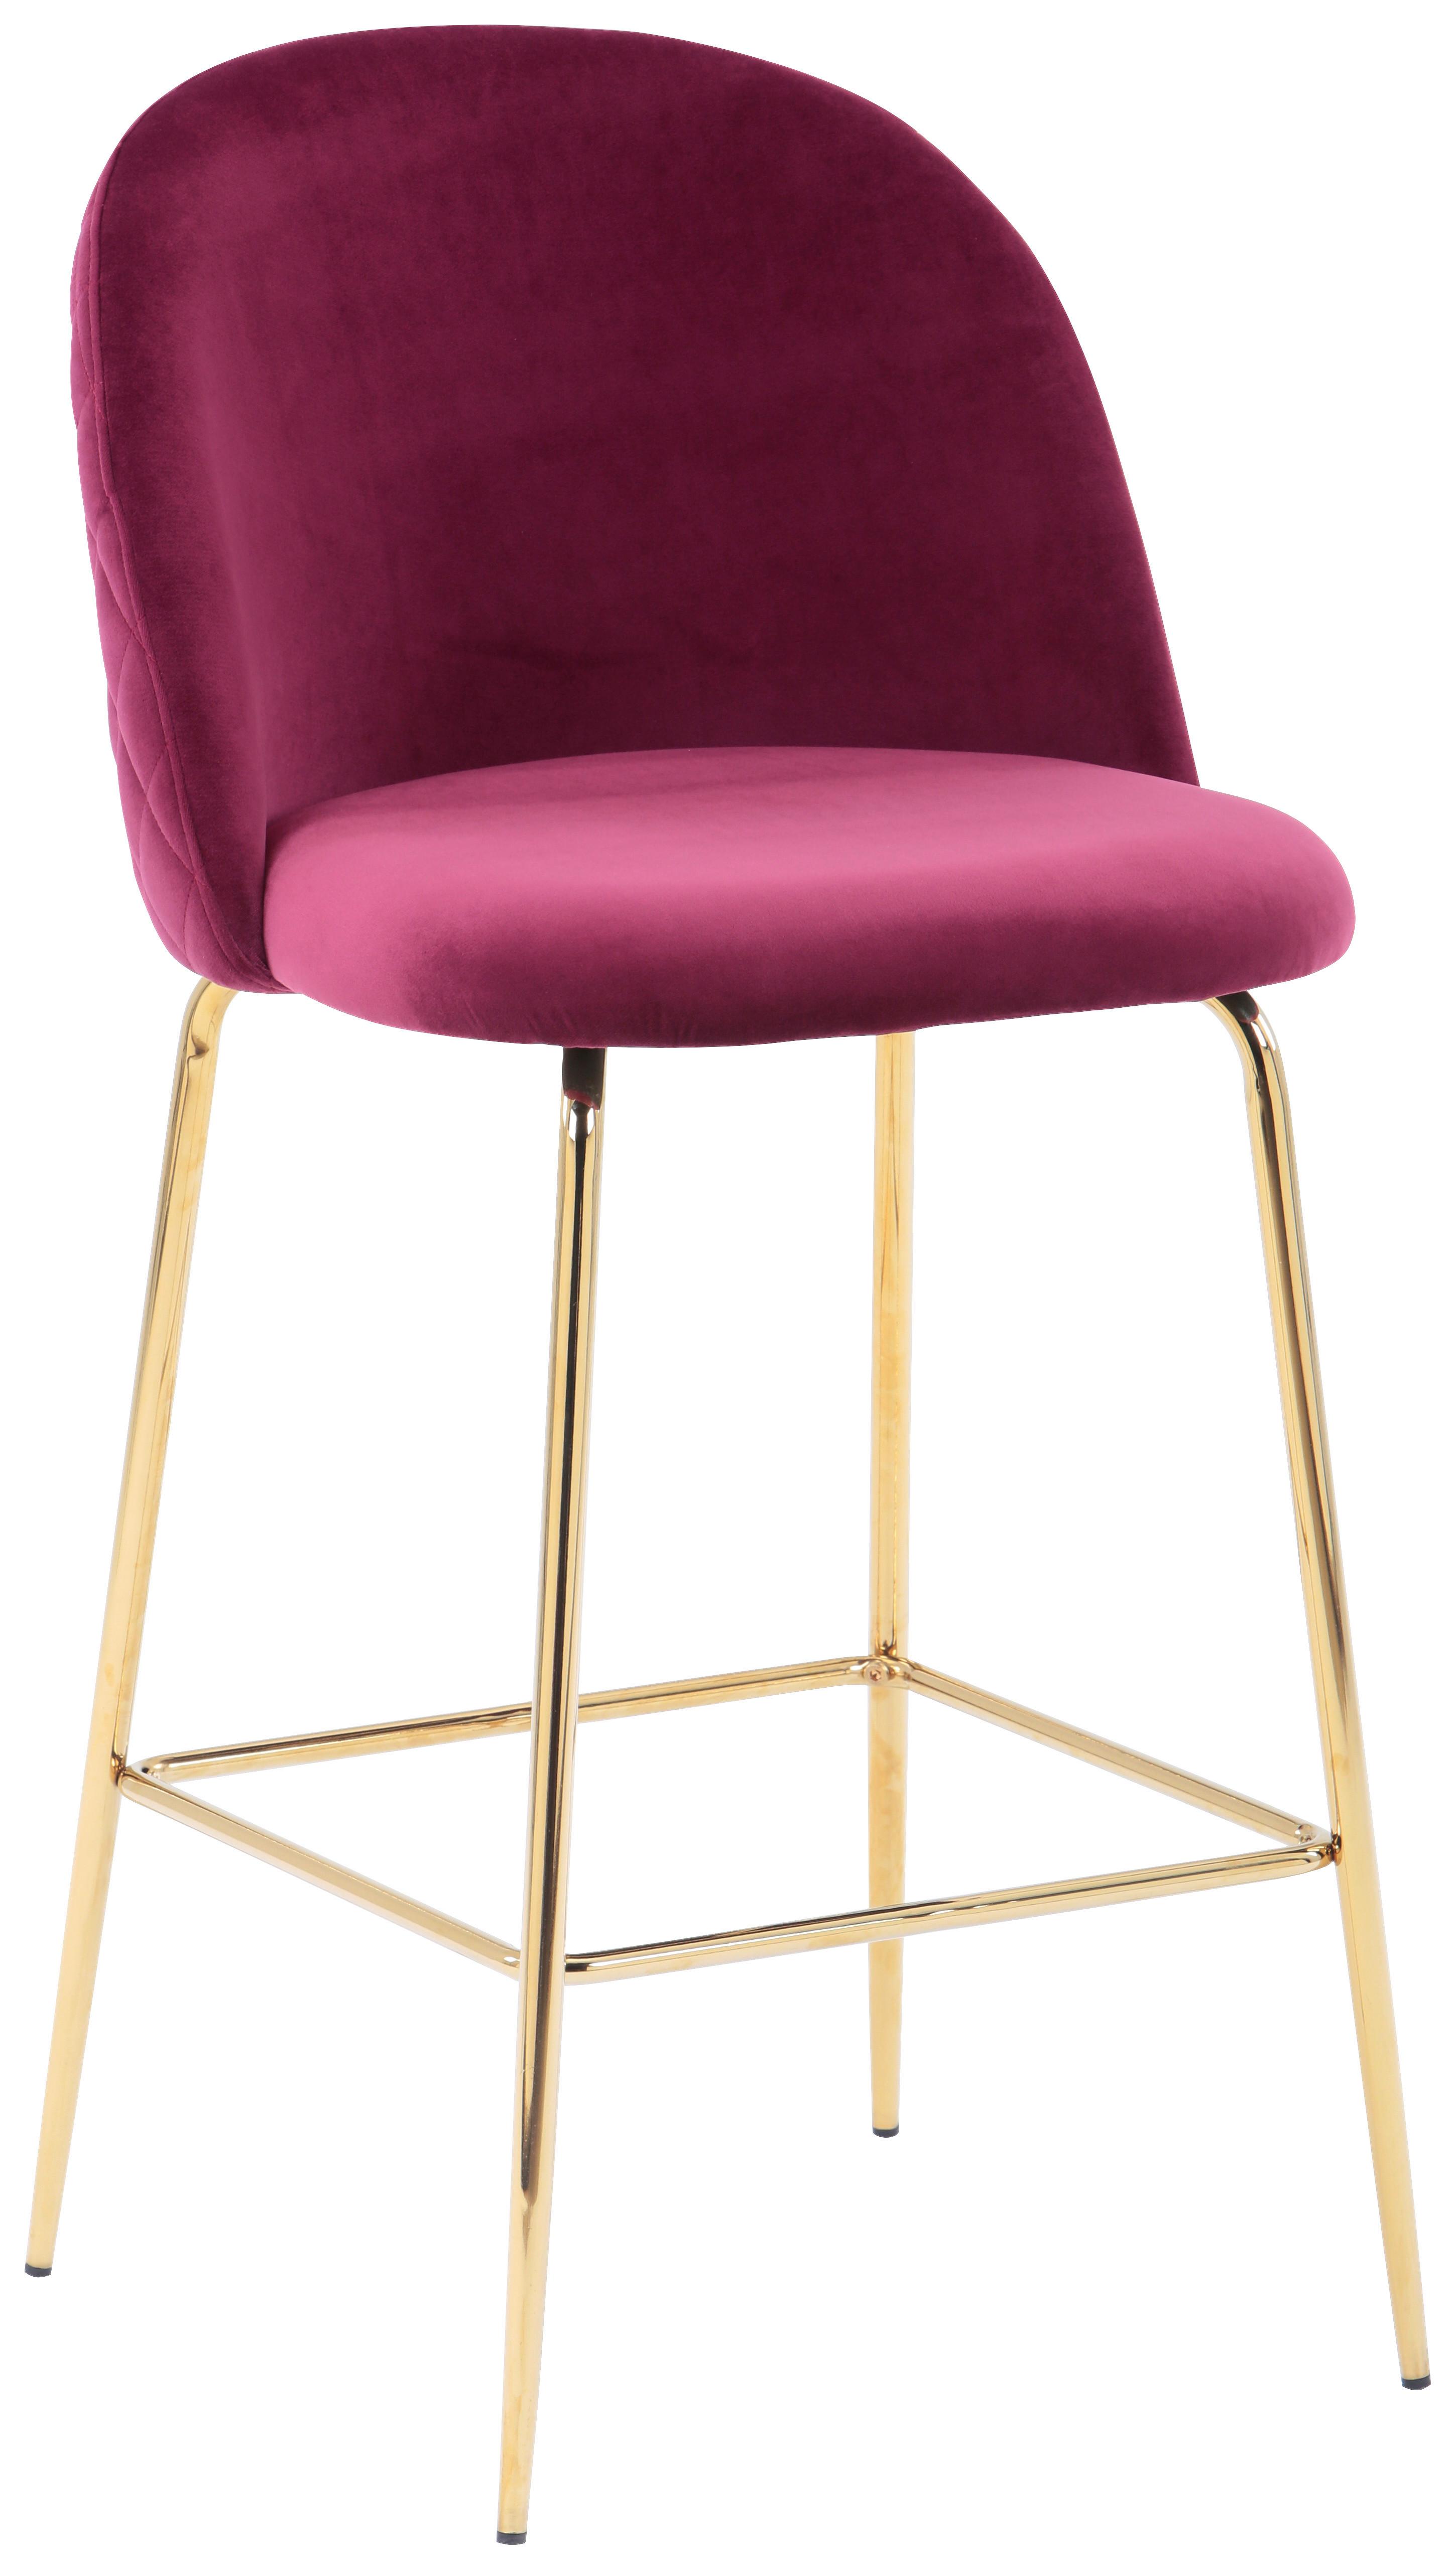 Barová Židle Artdeco Bar Bordó - bordeaux/barvy zlata, Moderní, kov/dřevo (50/55/97cm) - MID.YOU